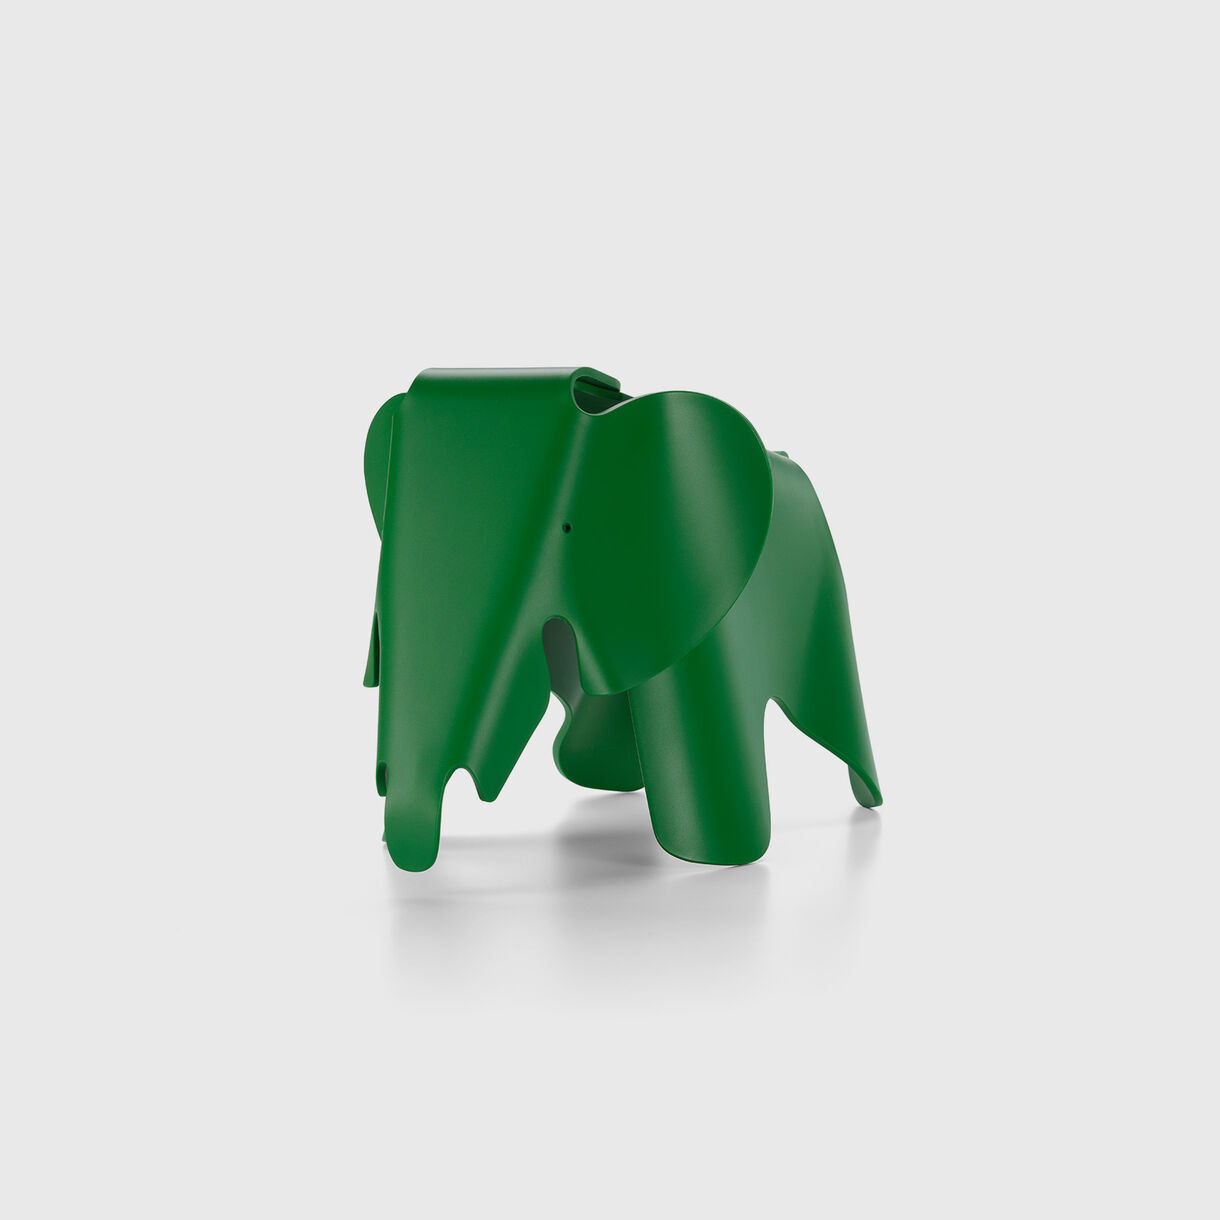 Eames Elephant Small, Palm Green